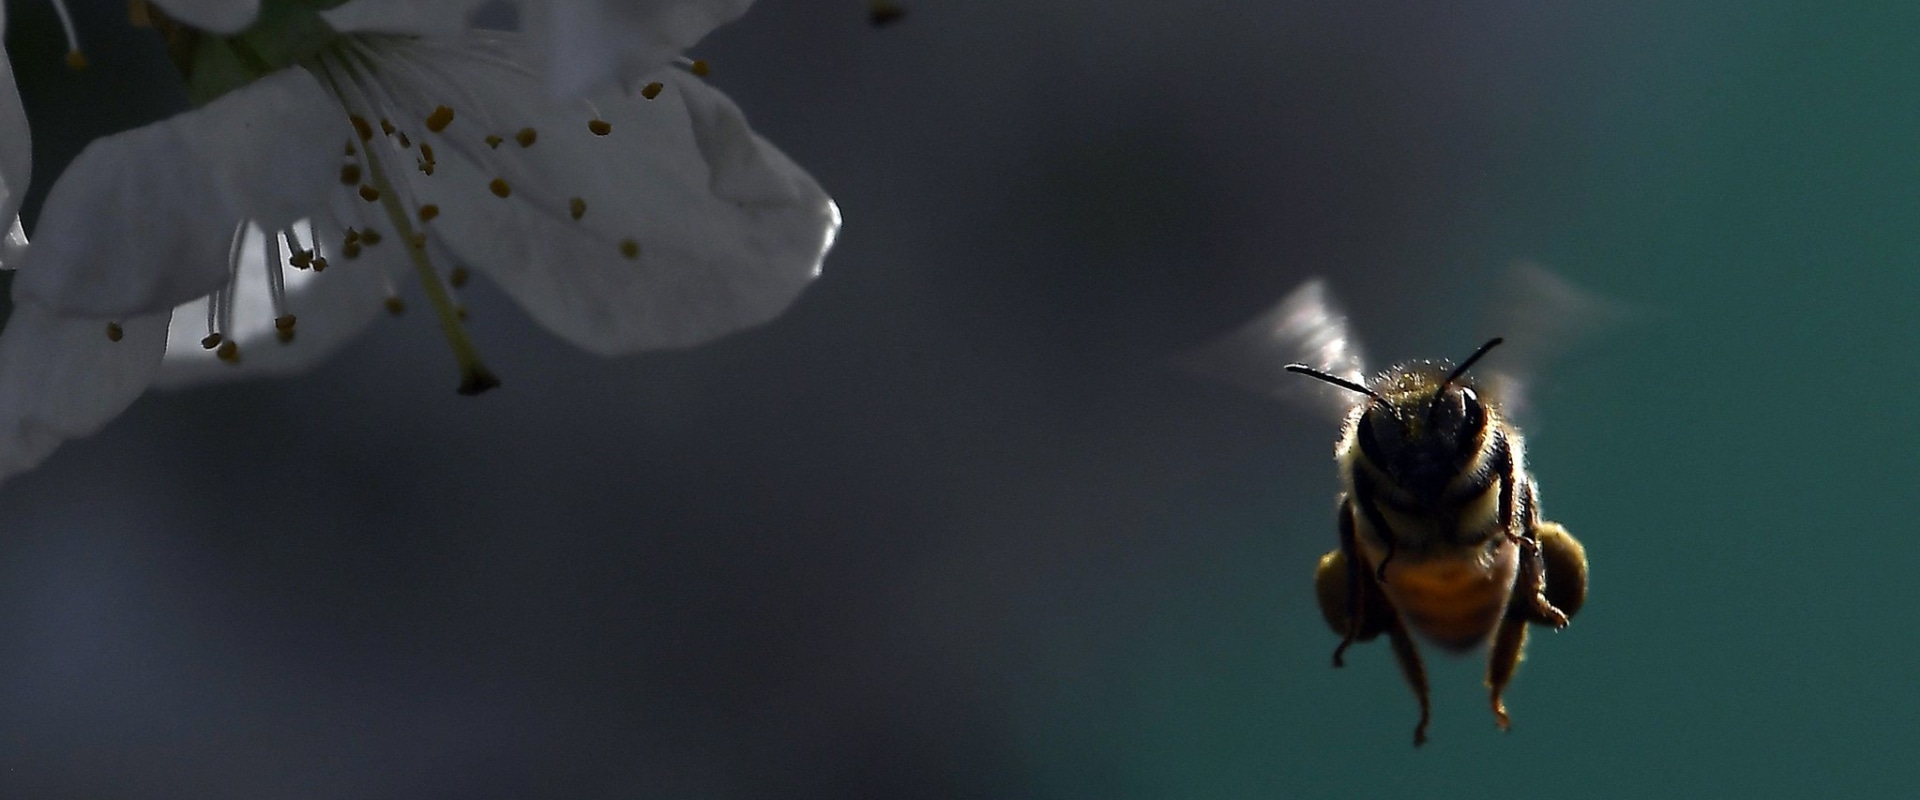 Avoiding Sudden Movements Near Bees